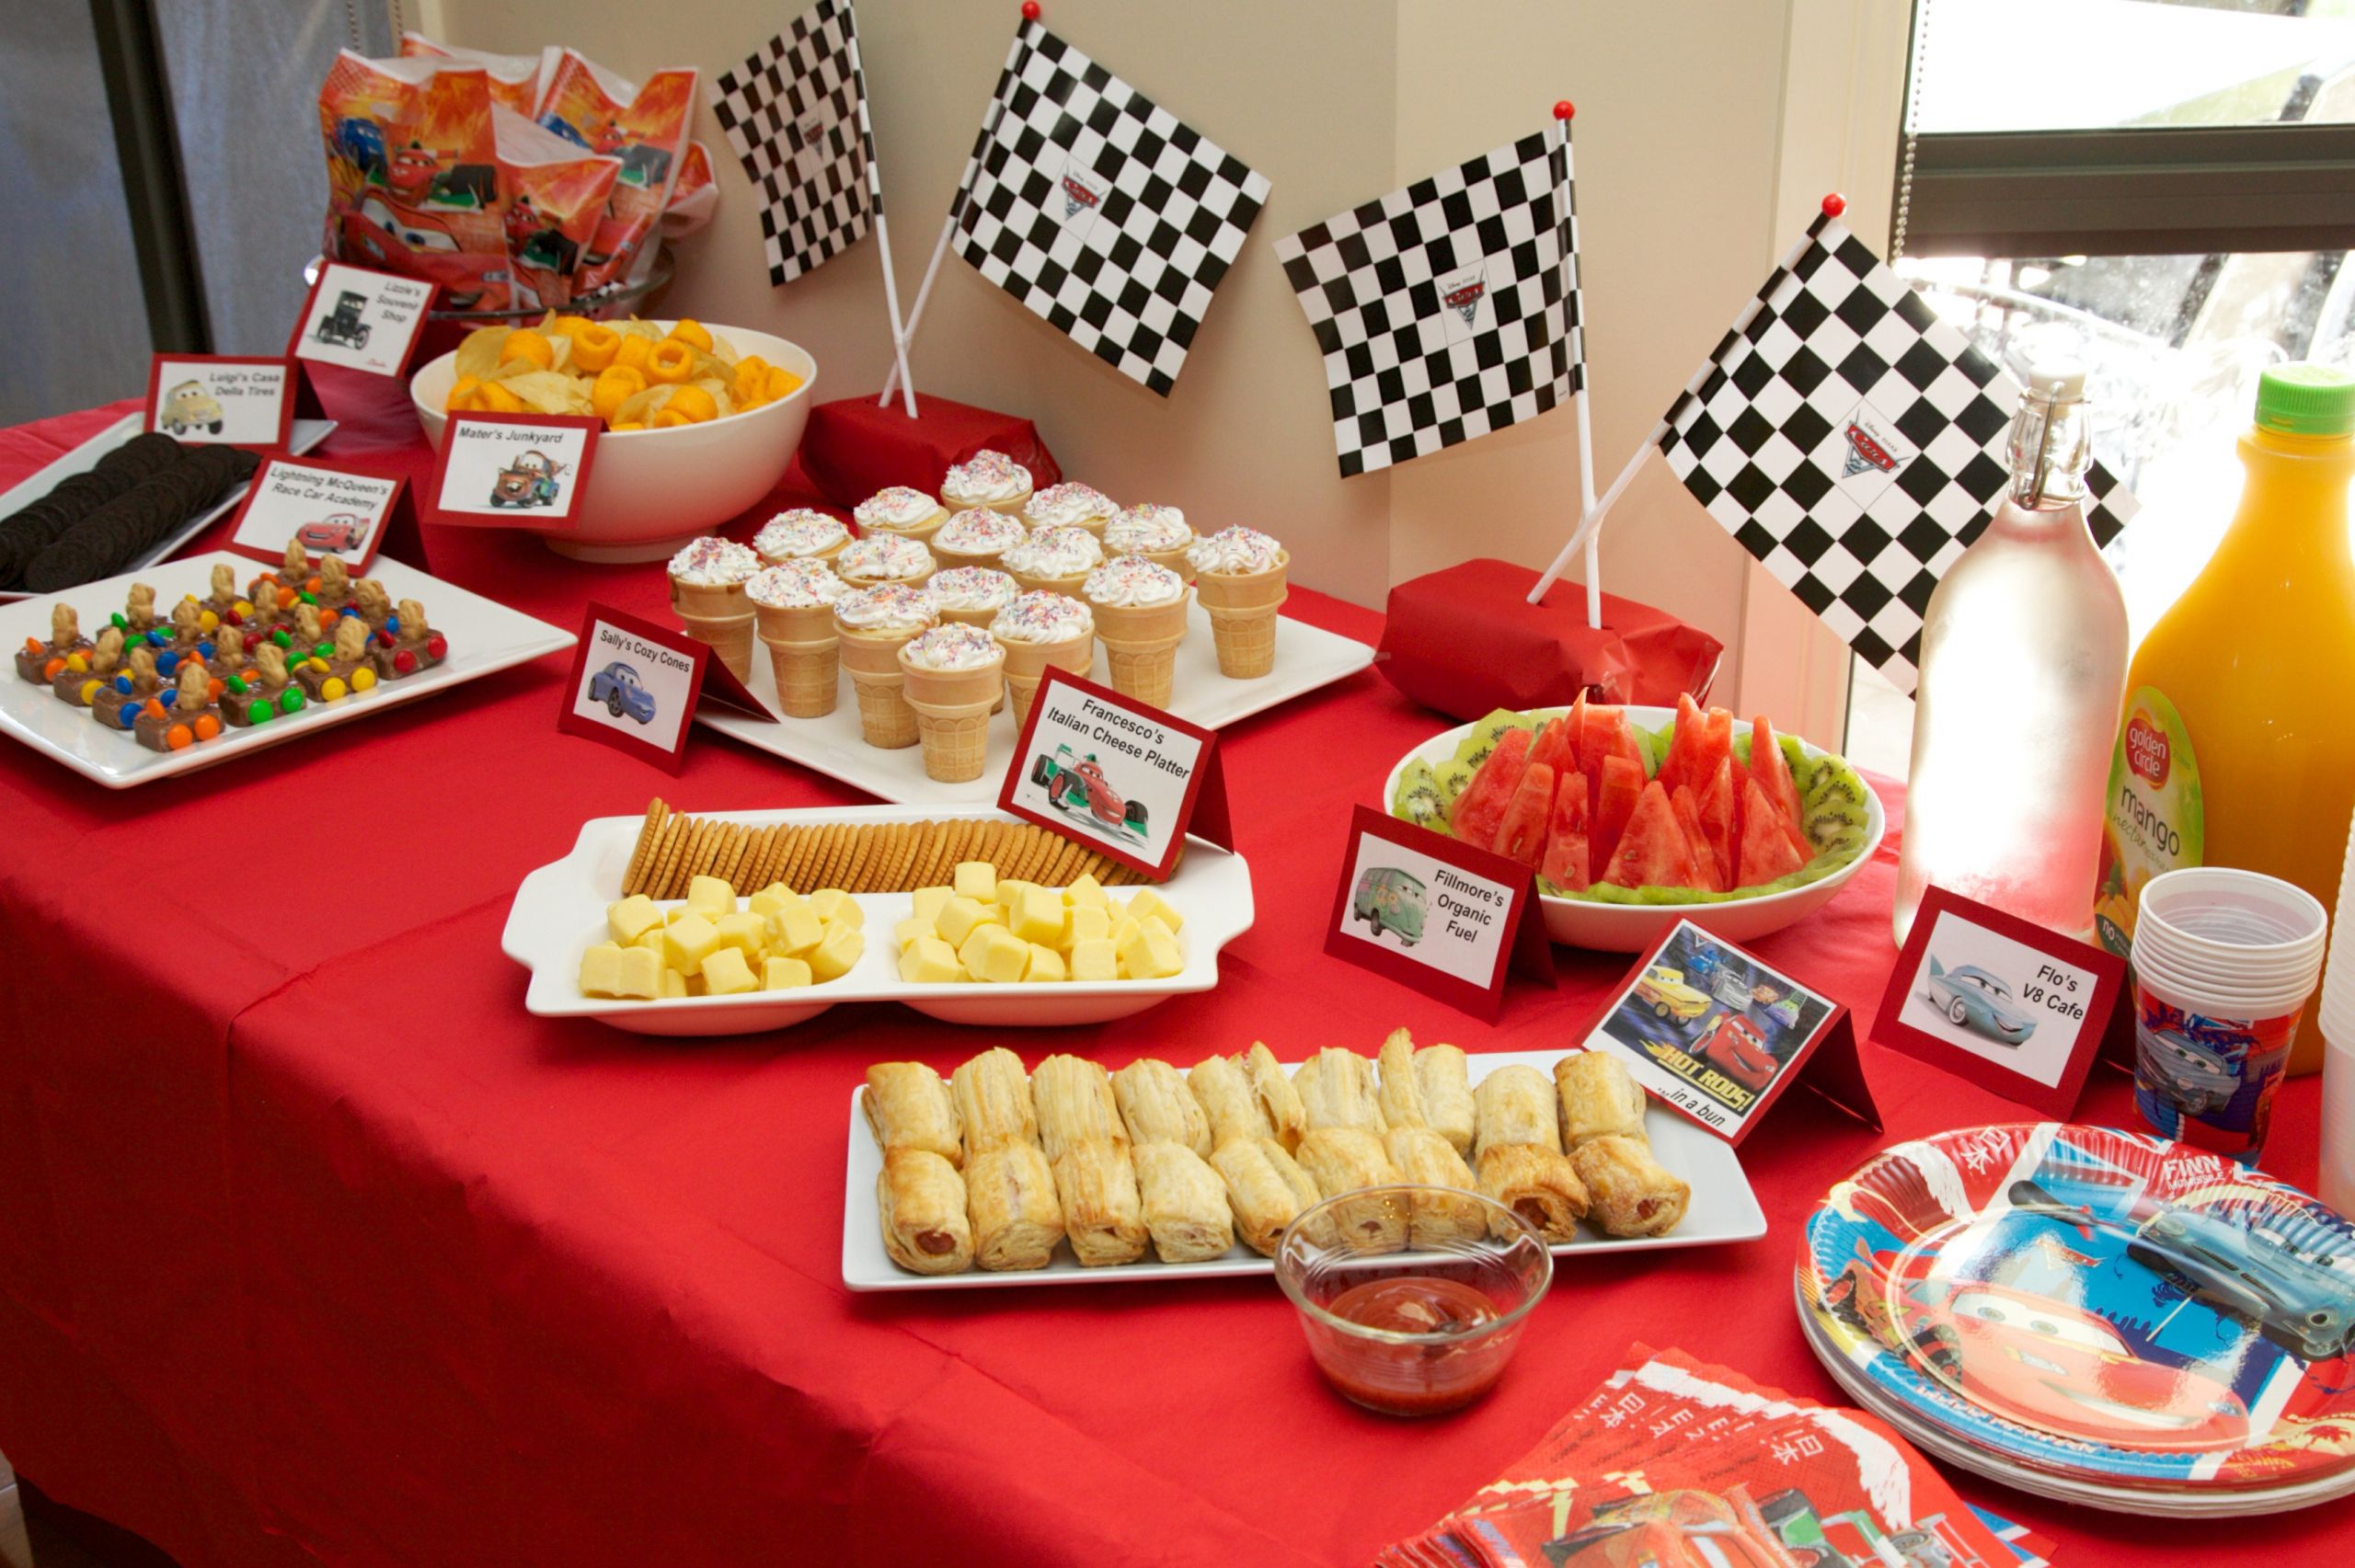 Disney Cars Party Food Ideas
 Disney Cars Birthday Party on a Bud Kidz Activities